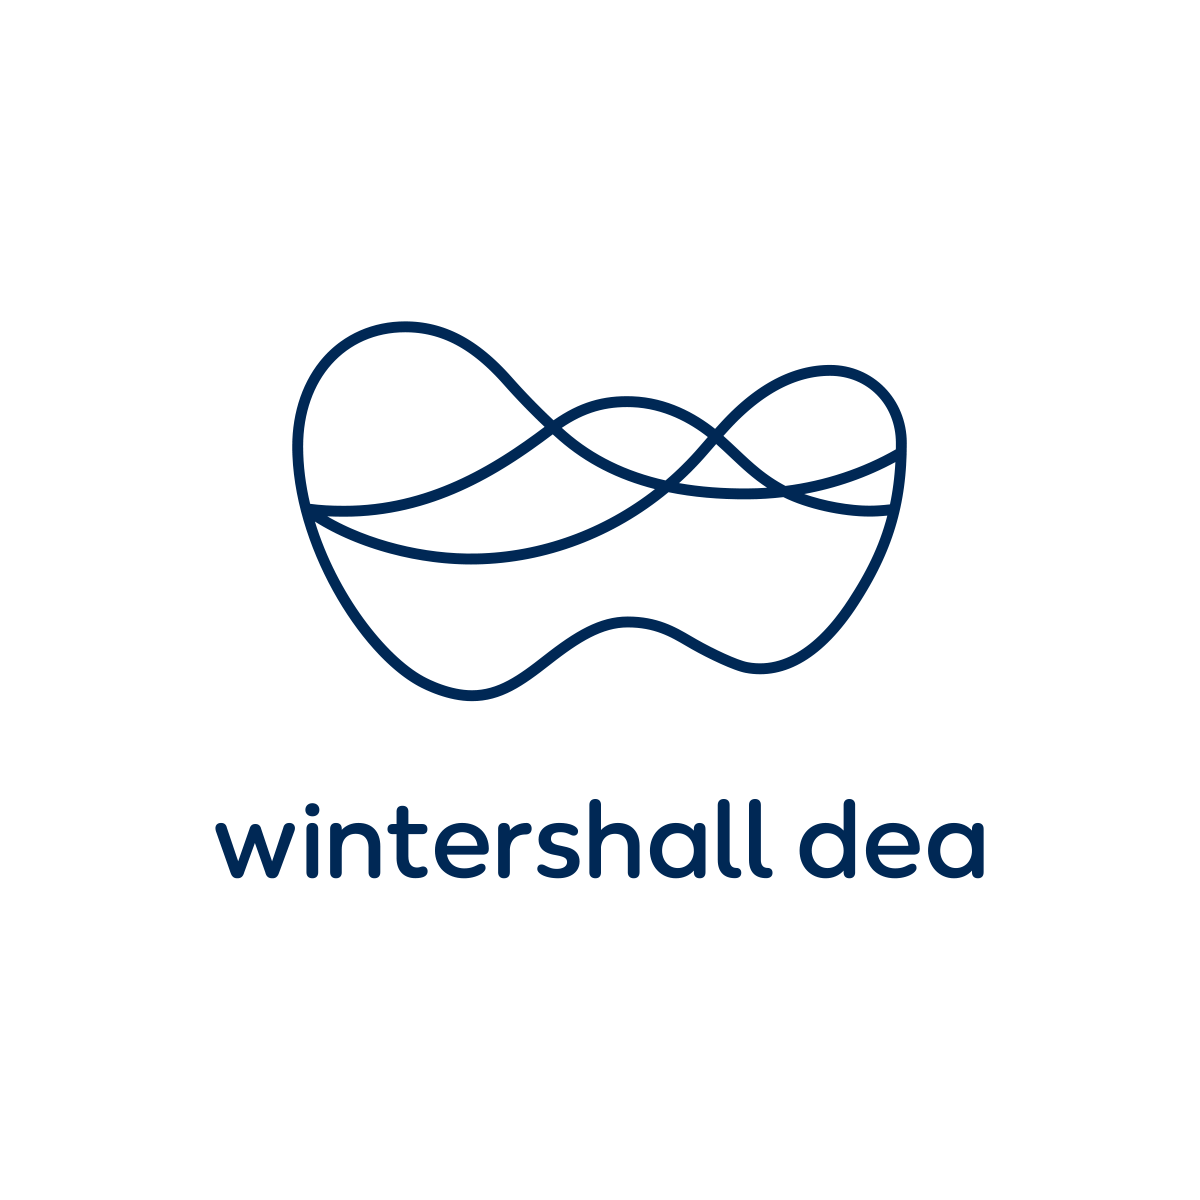 wintershall dea